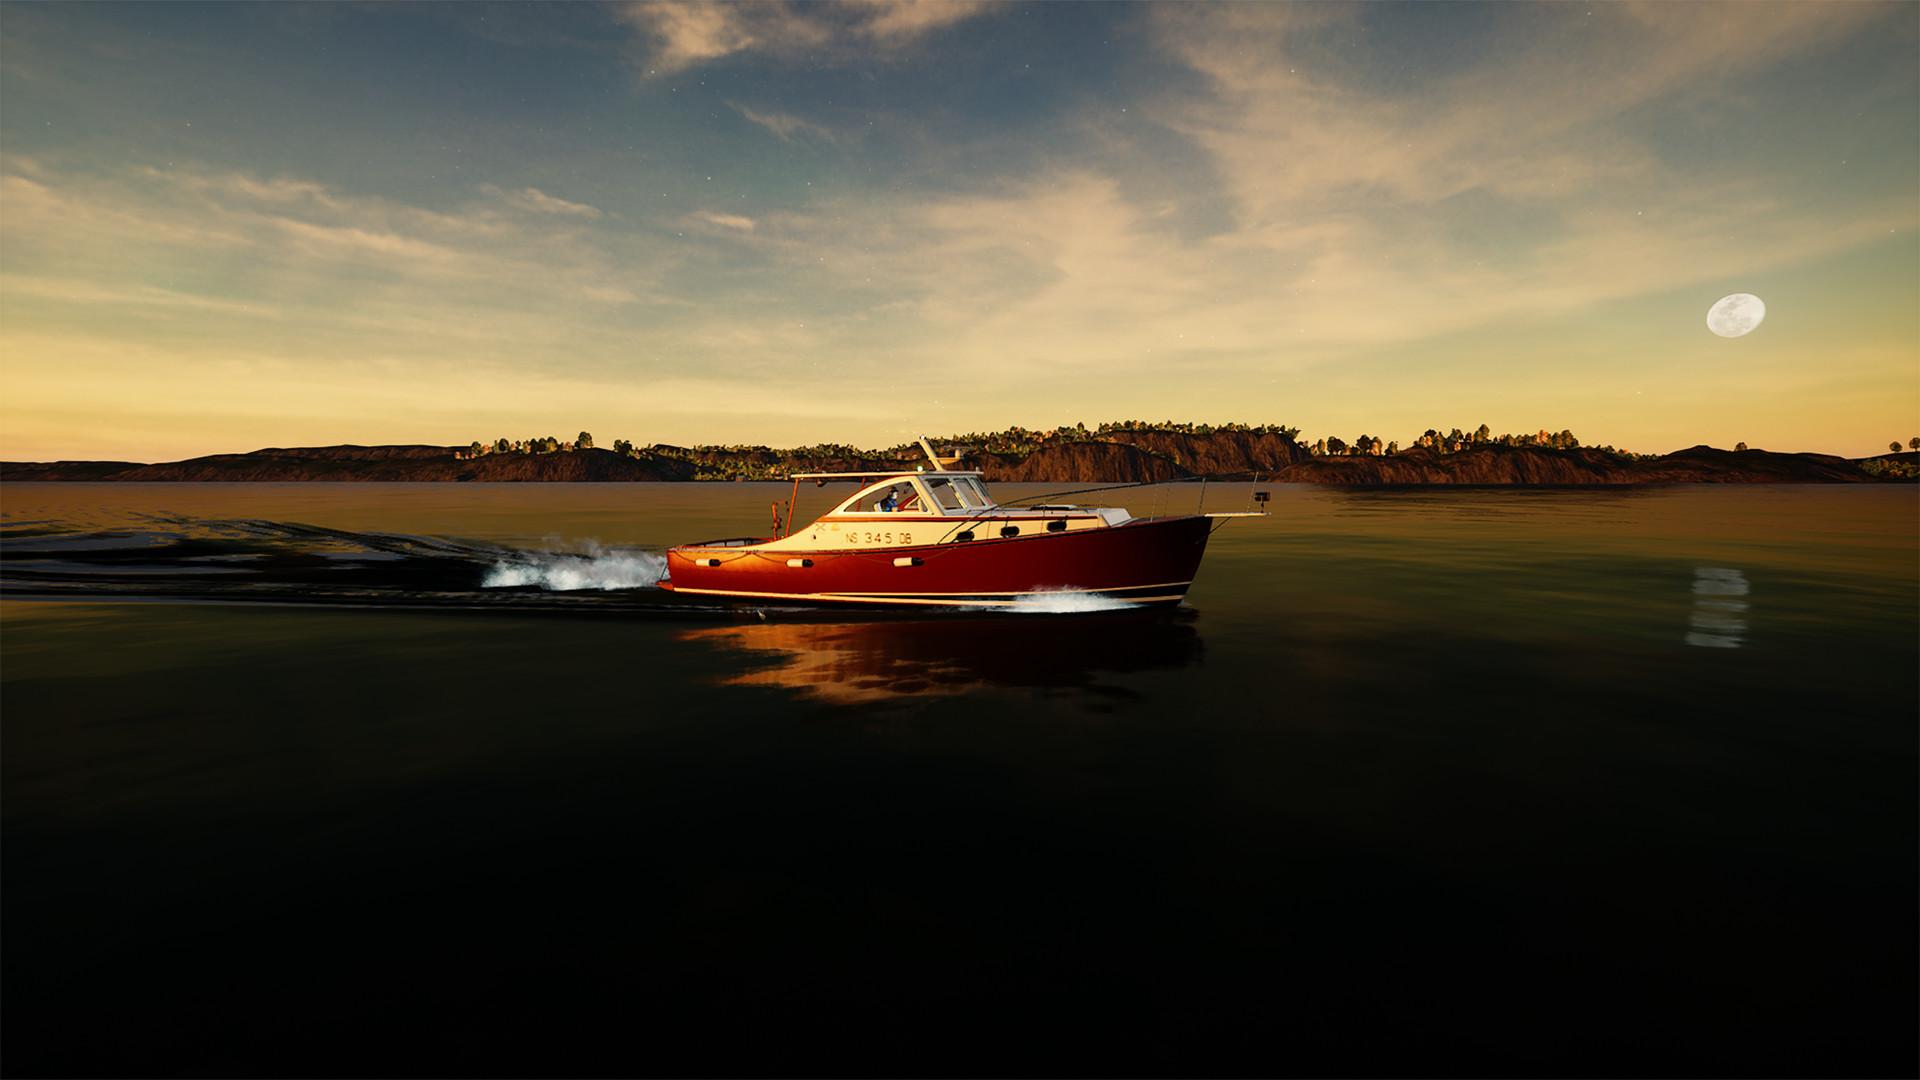 Screenshot №5 from game Fishing: North Atlantic - Enhanced Edition